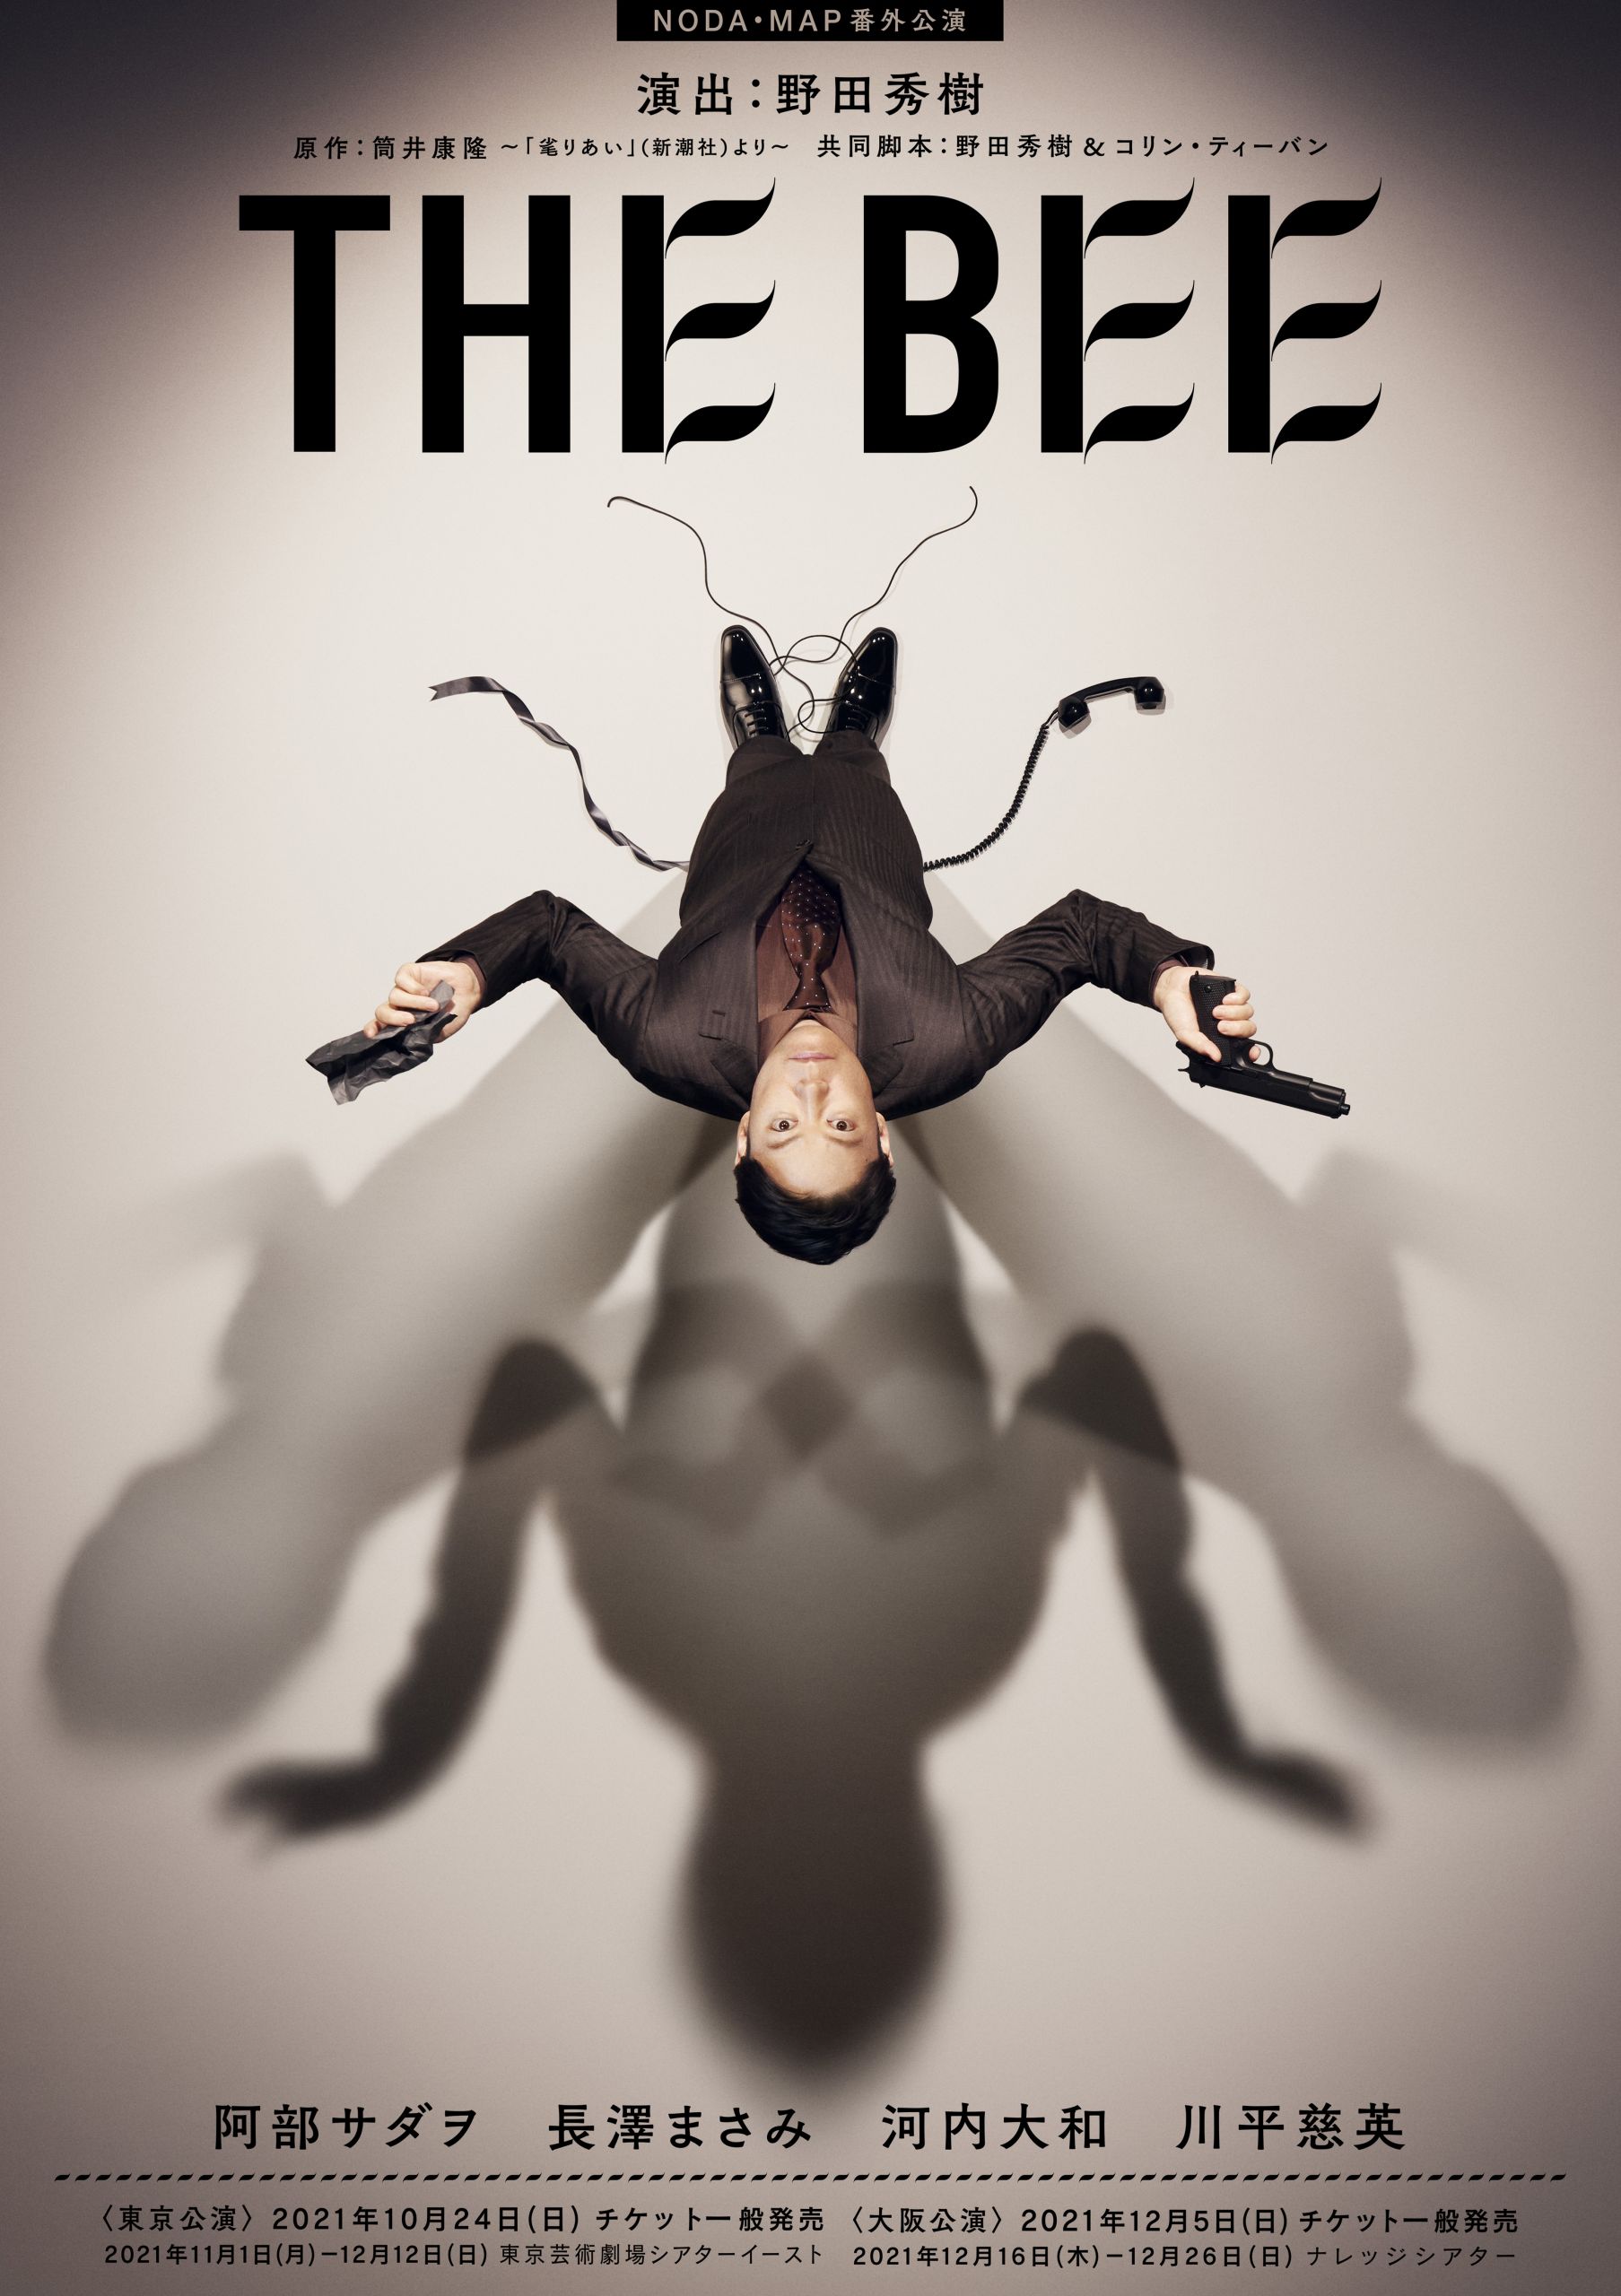 Hideki Noda the bee